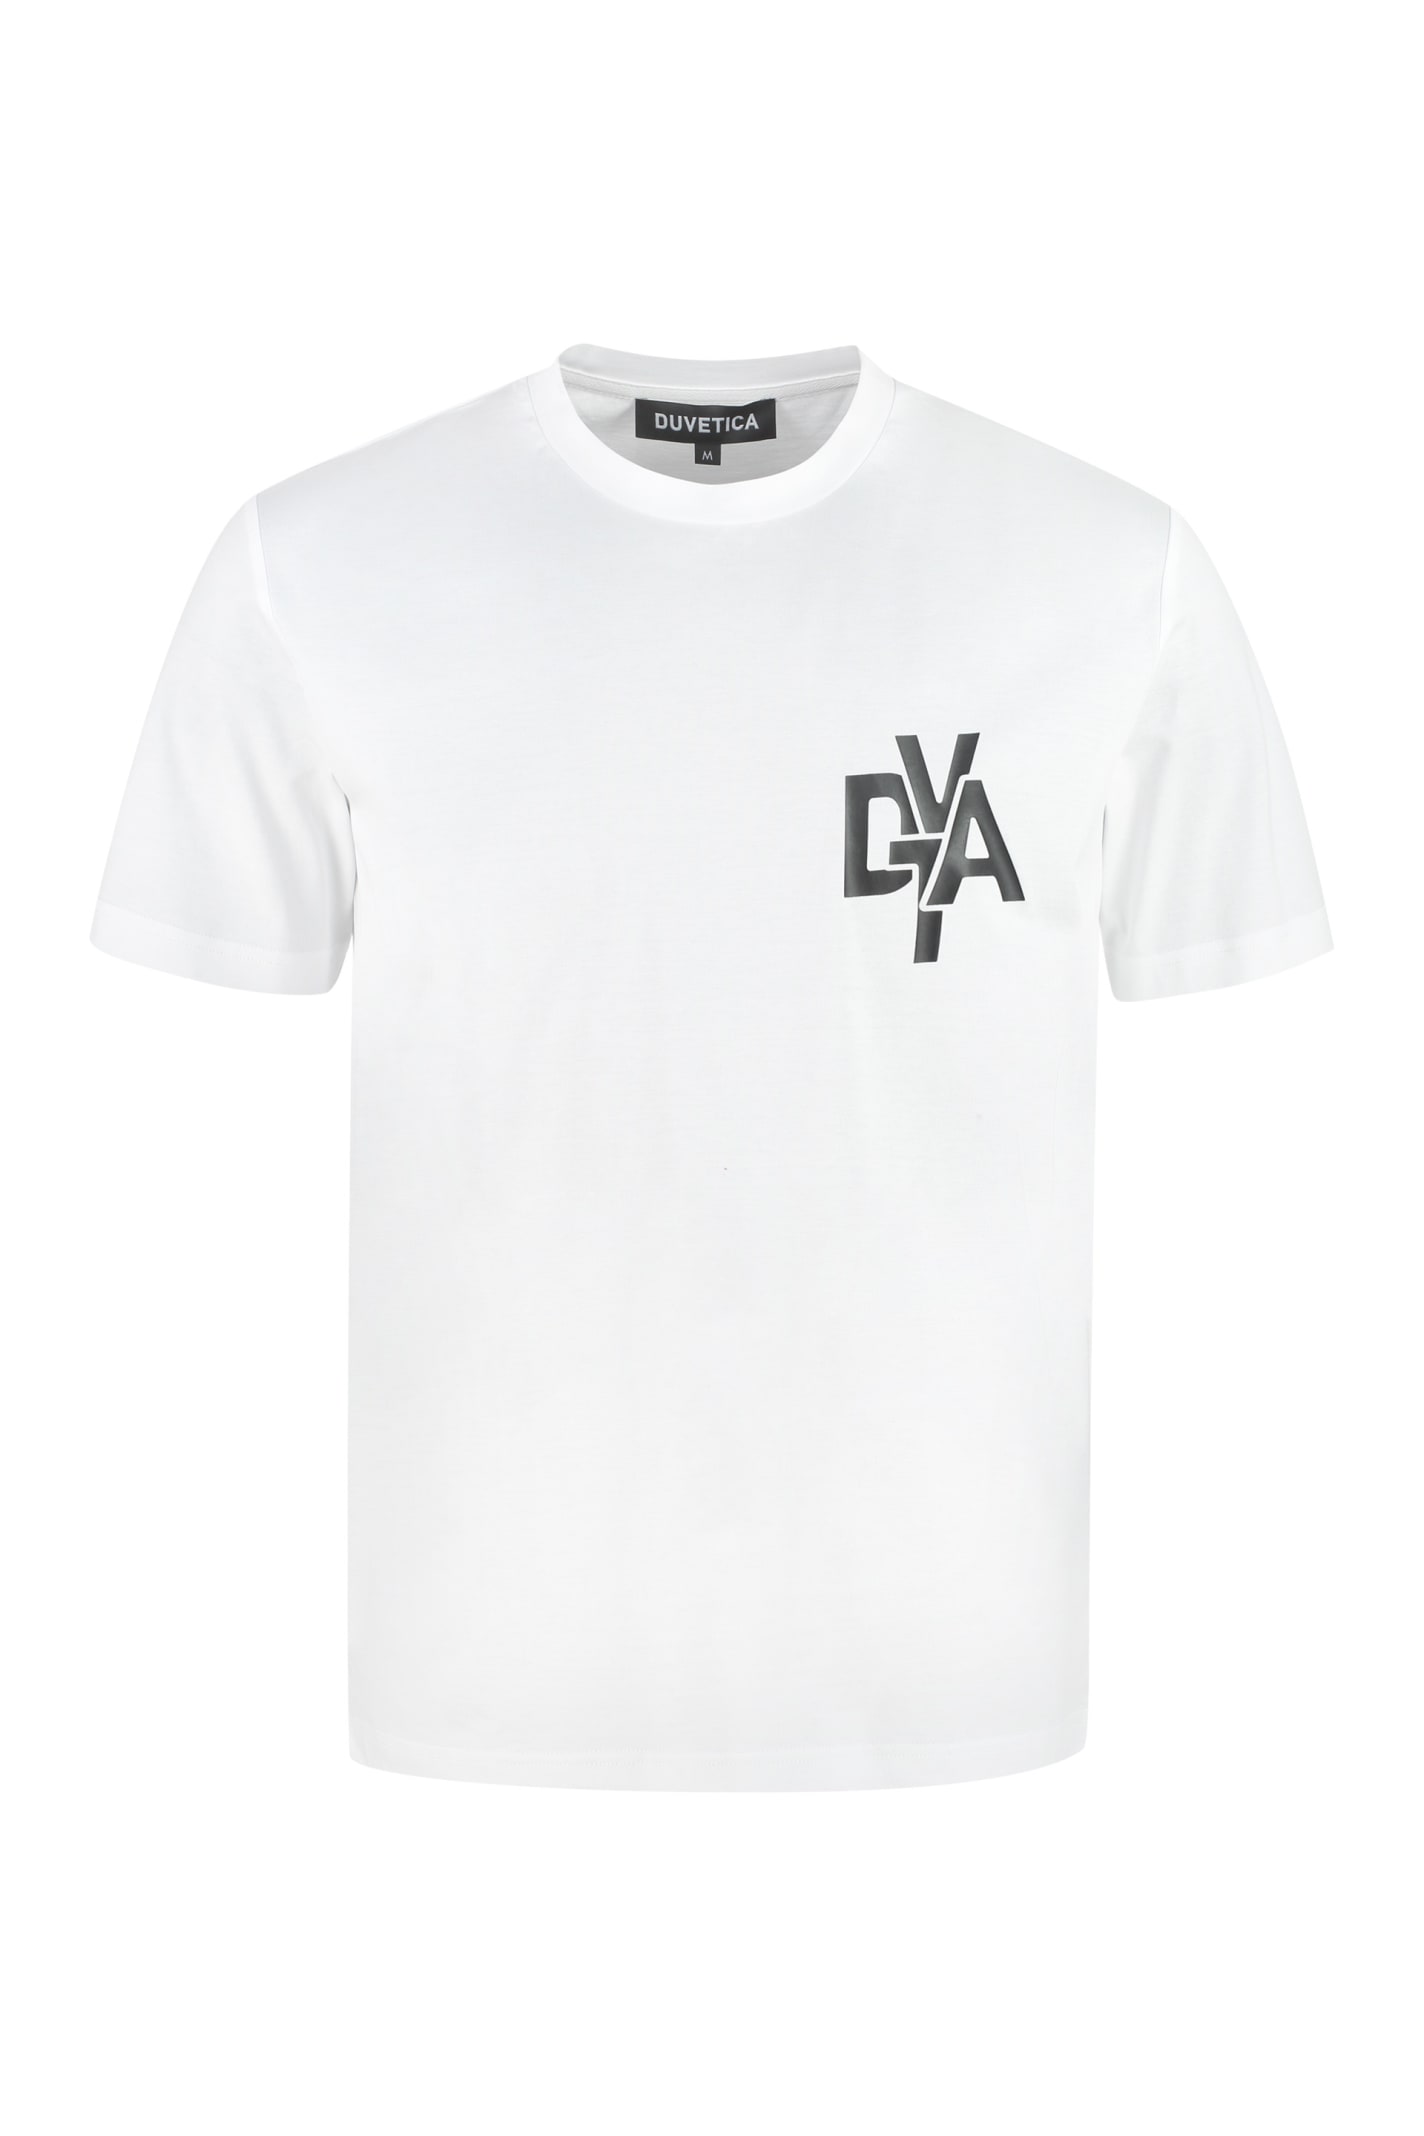 Duvetica Logo Cotton T-shirt